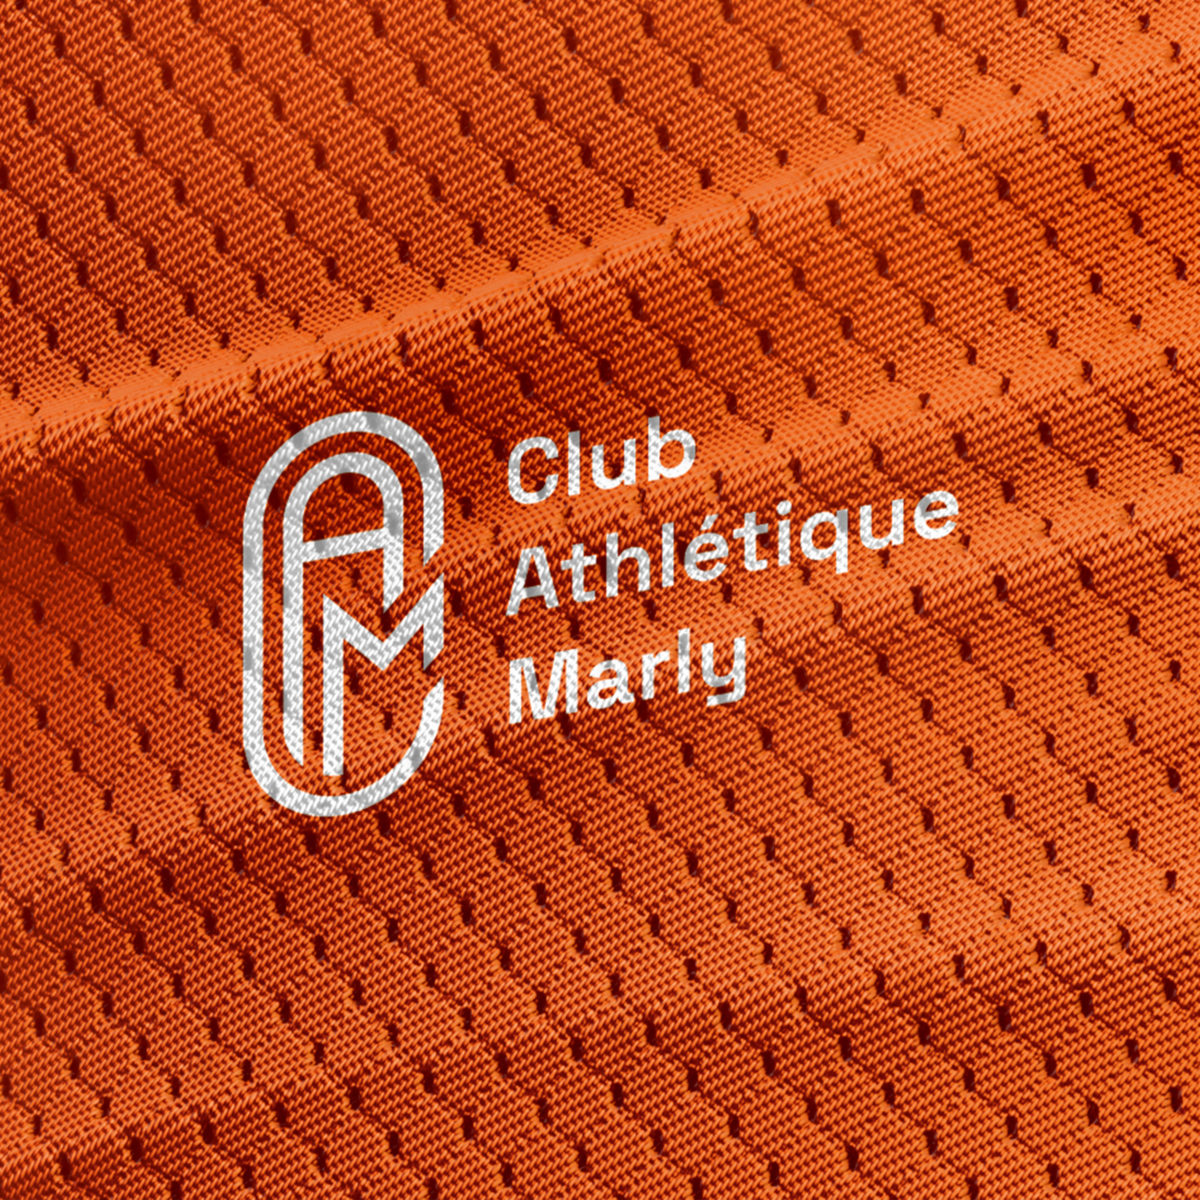 Logo Club Athlétique Marly sur un maillot orange.